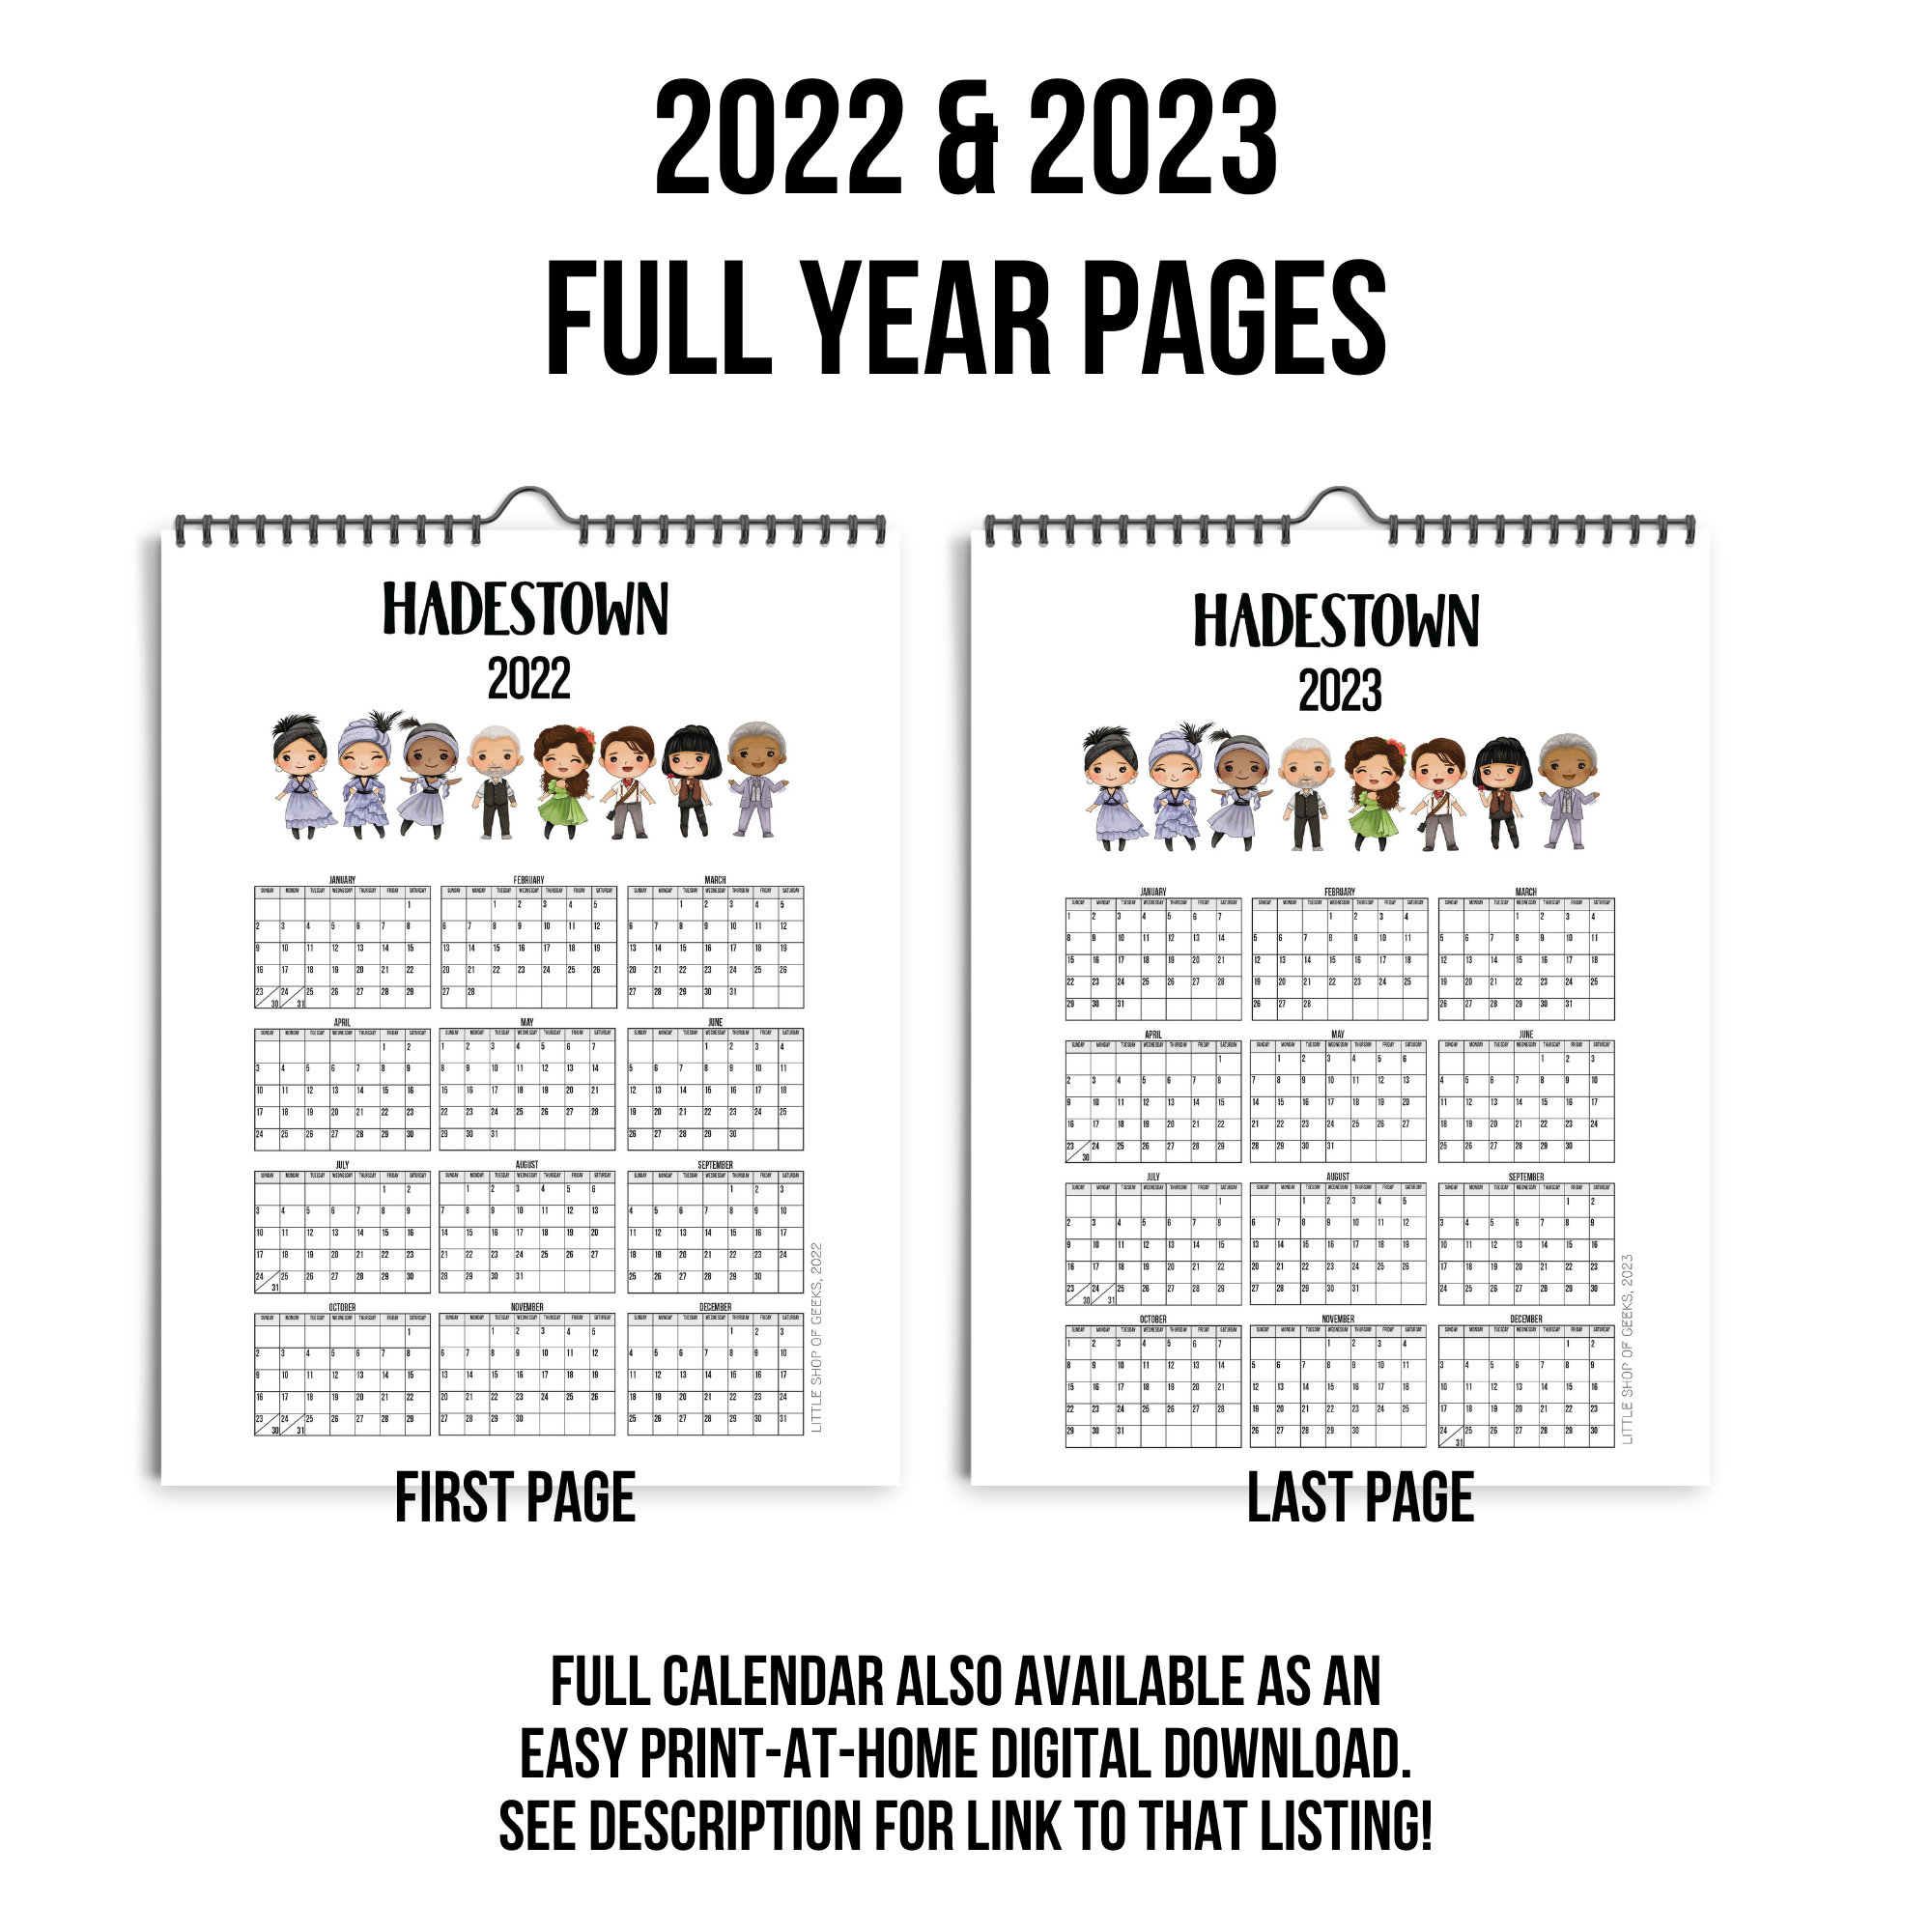 Hadestown 2022 Wall Calendar - Broadway Musical Gift Desk Office - Year at a Glance 2022-2023